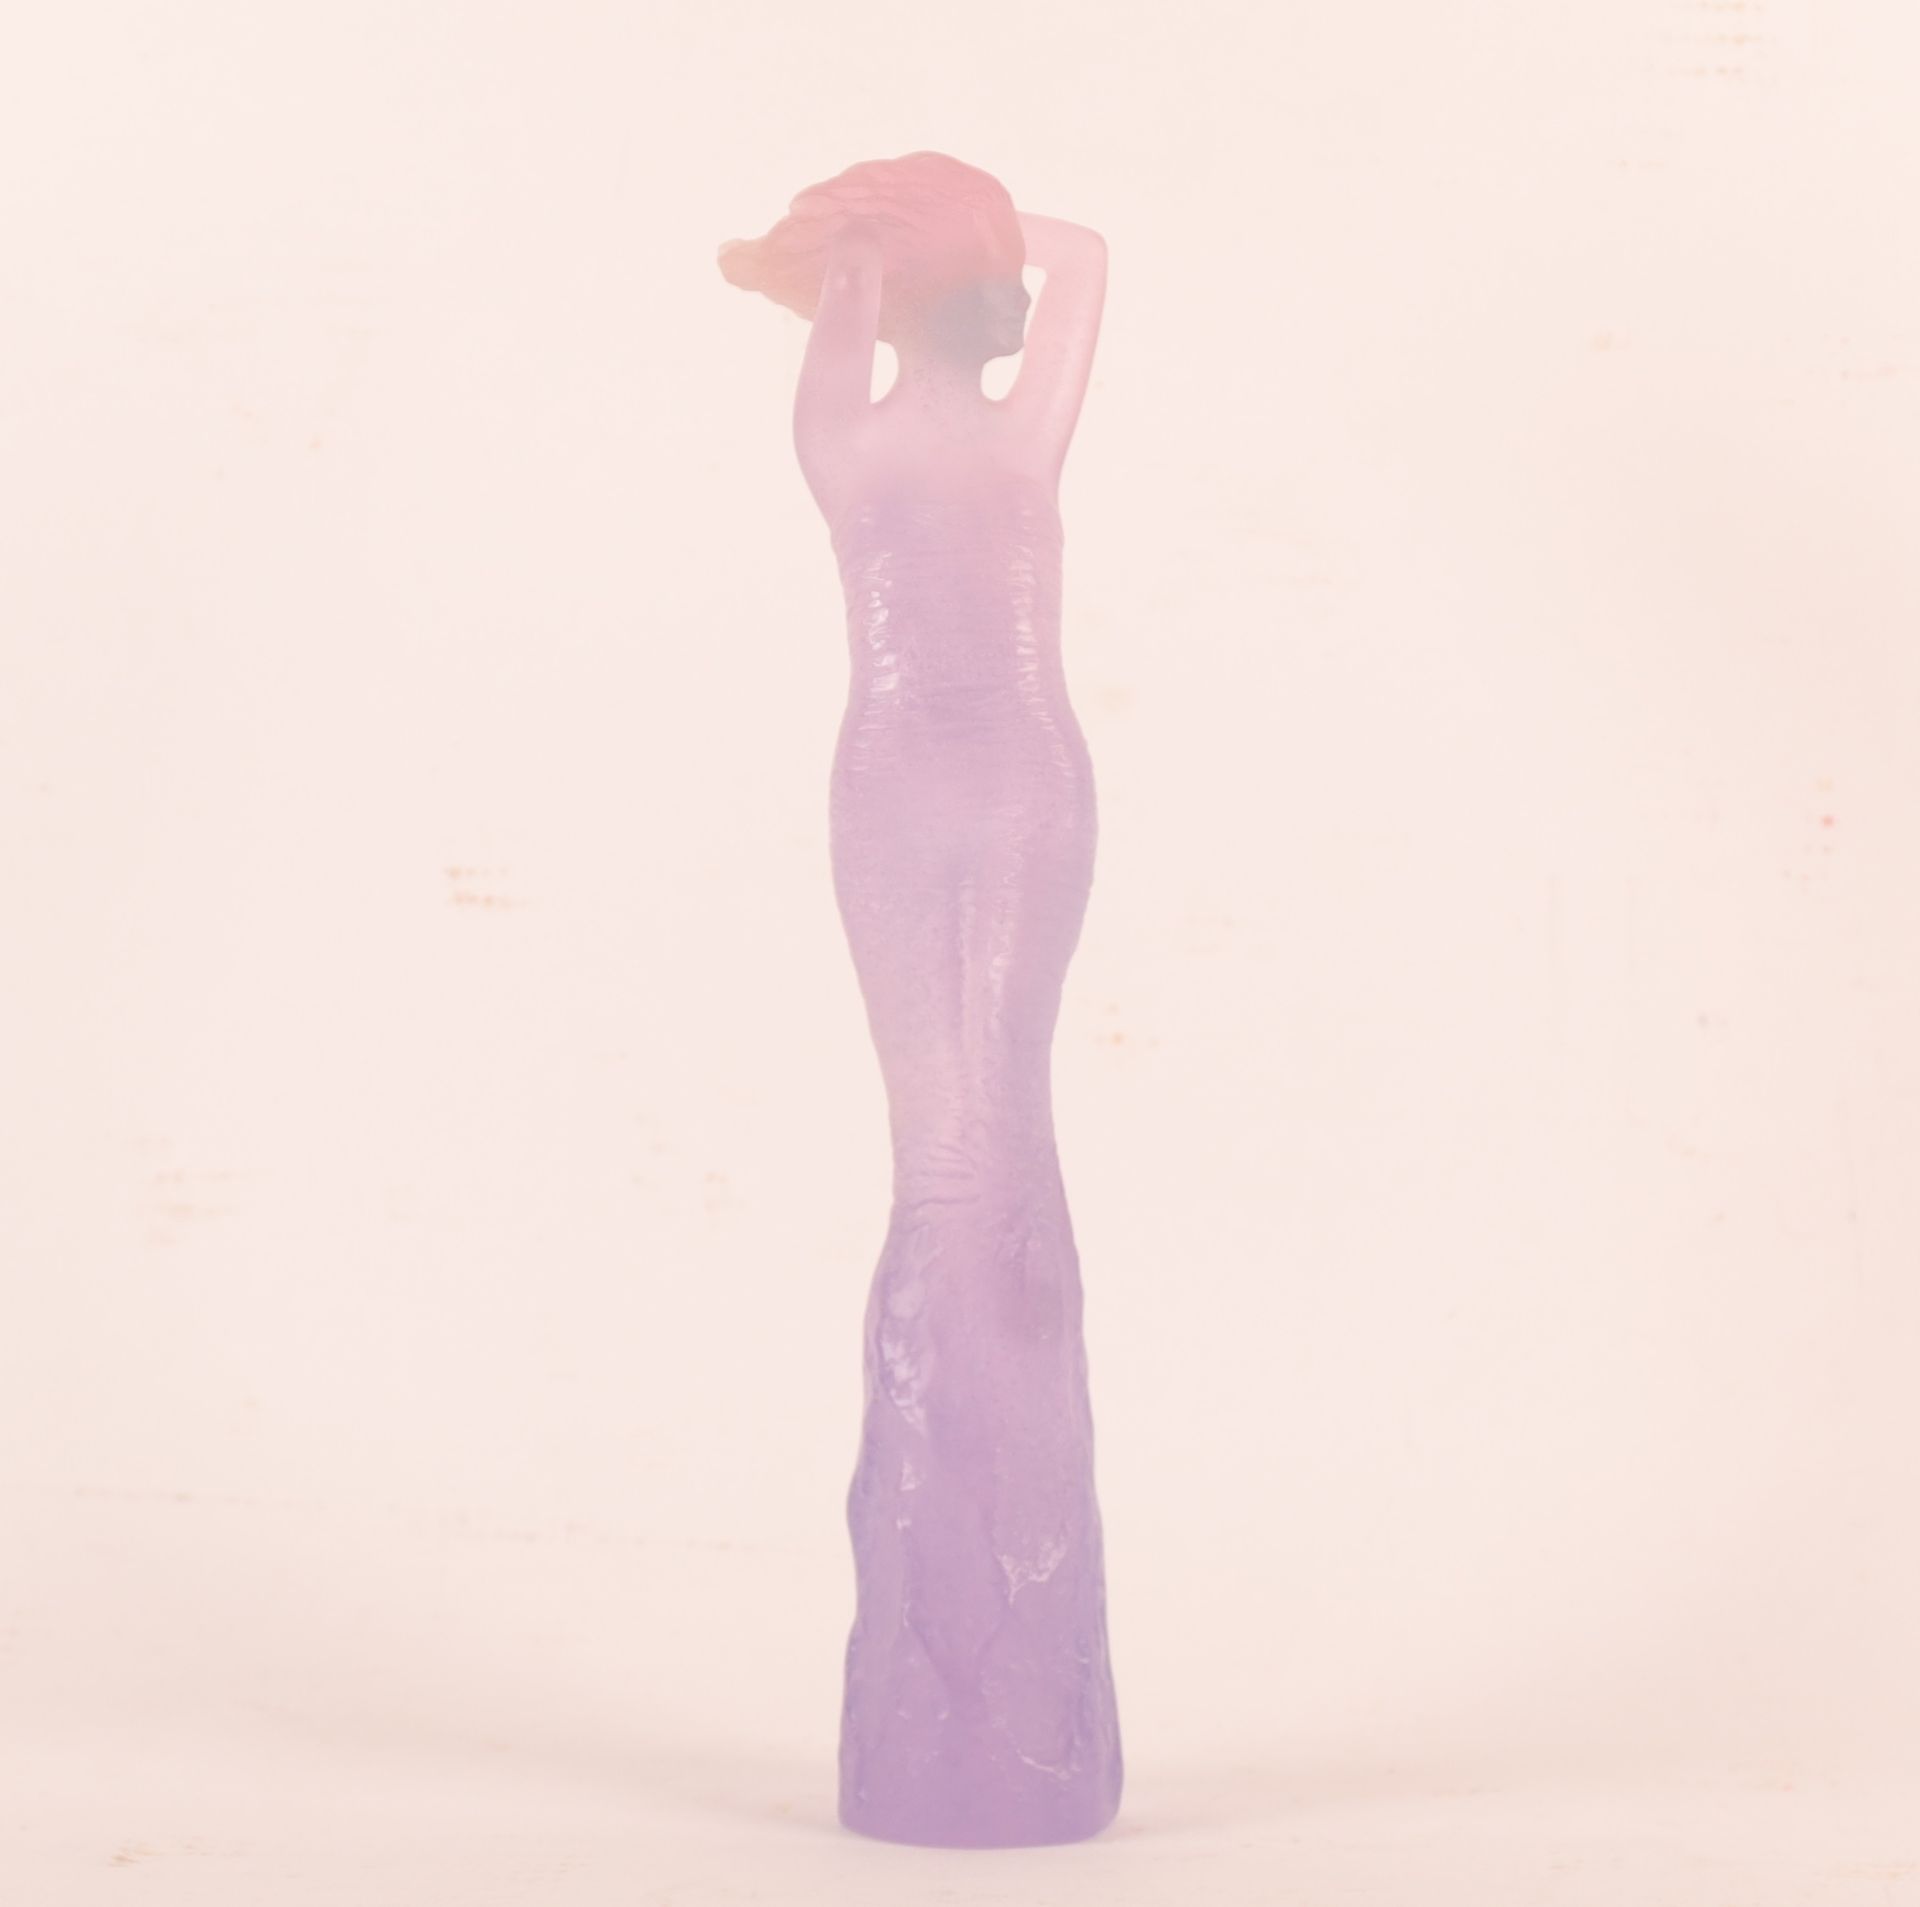 Daum et J.P. Richard 让-菲利普-里夏尔（生于1947年）和法国DAUM公司的雕塑《APOLLINE》。
紫色有色玻璃膏，显示一个穿晚礼服的&hellip;